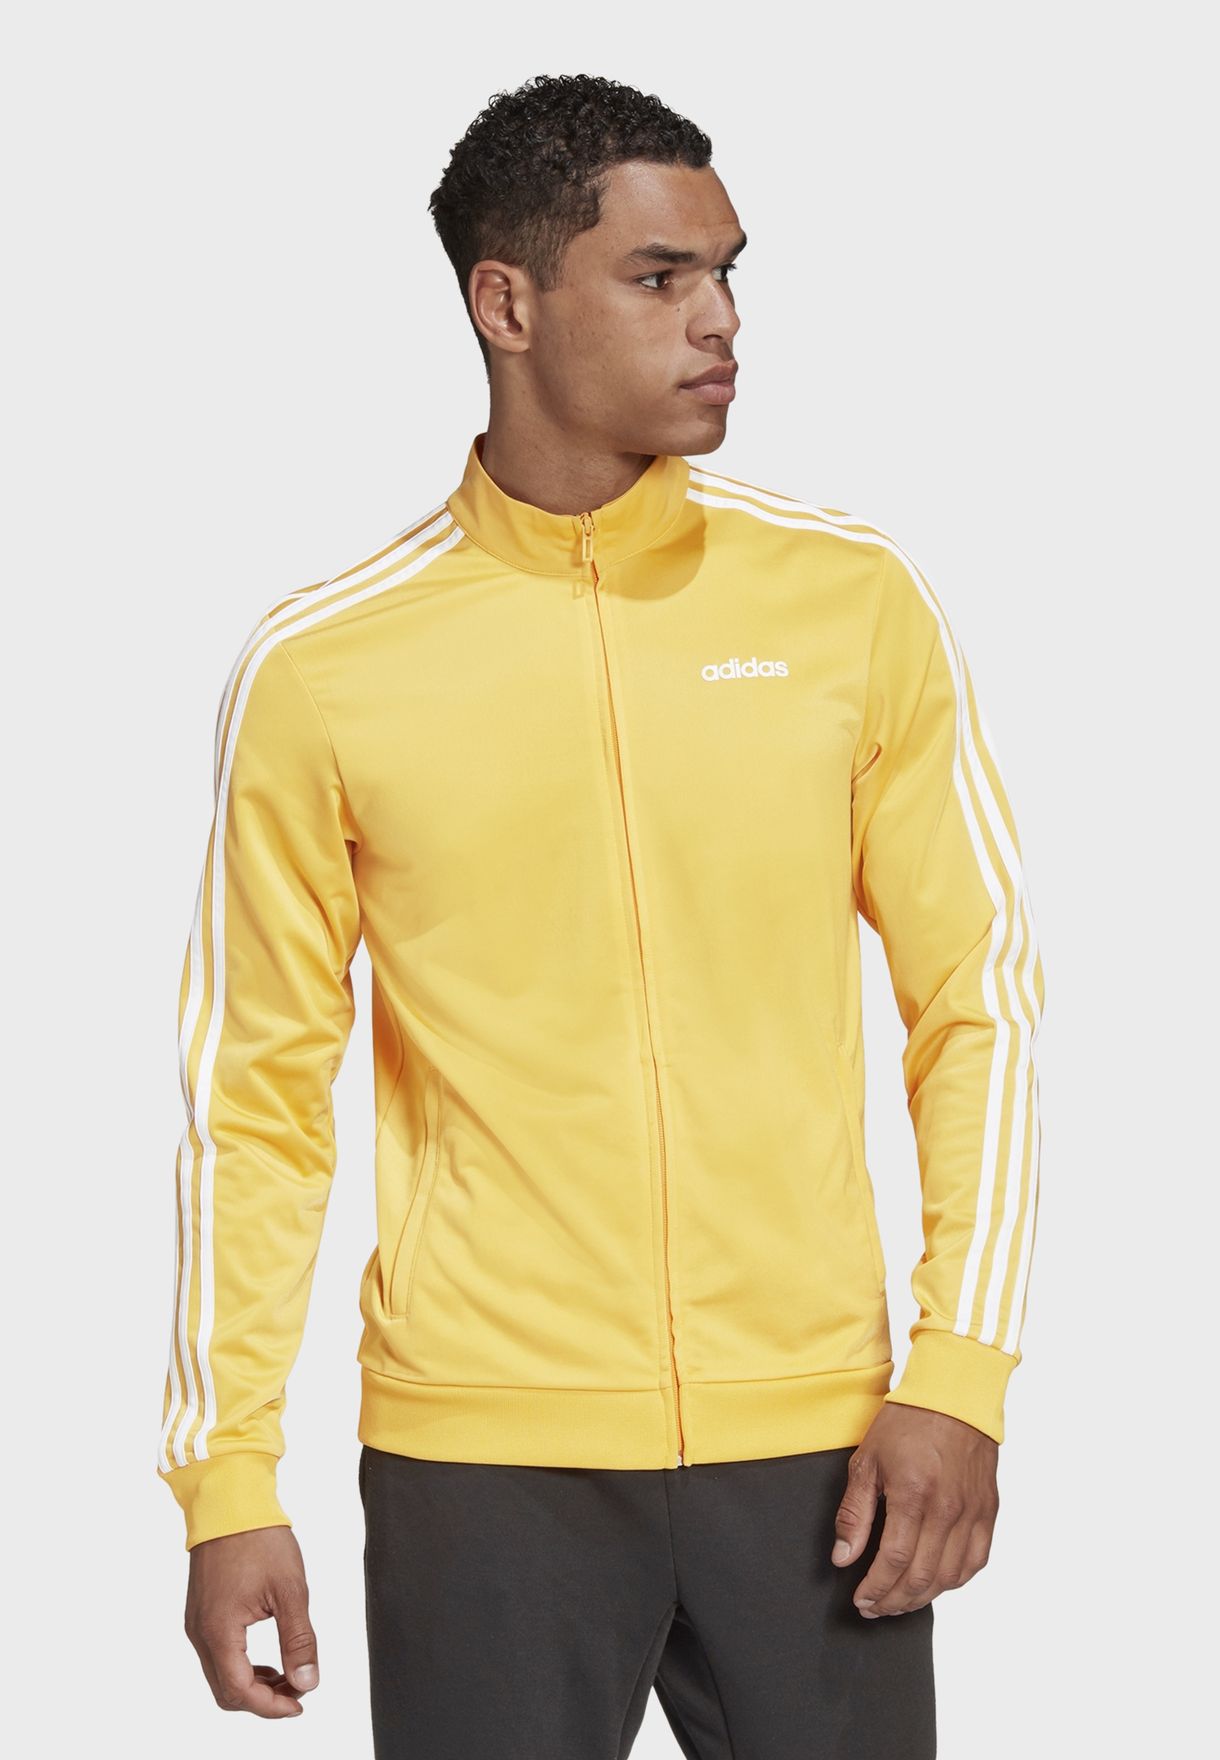 adidas yellow stripe jacket